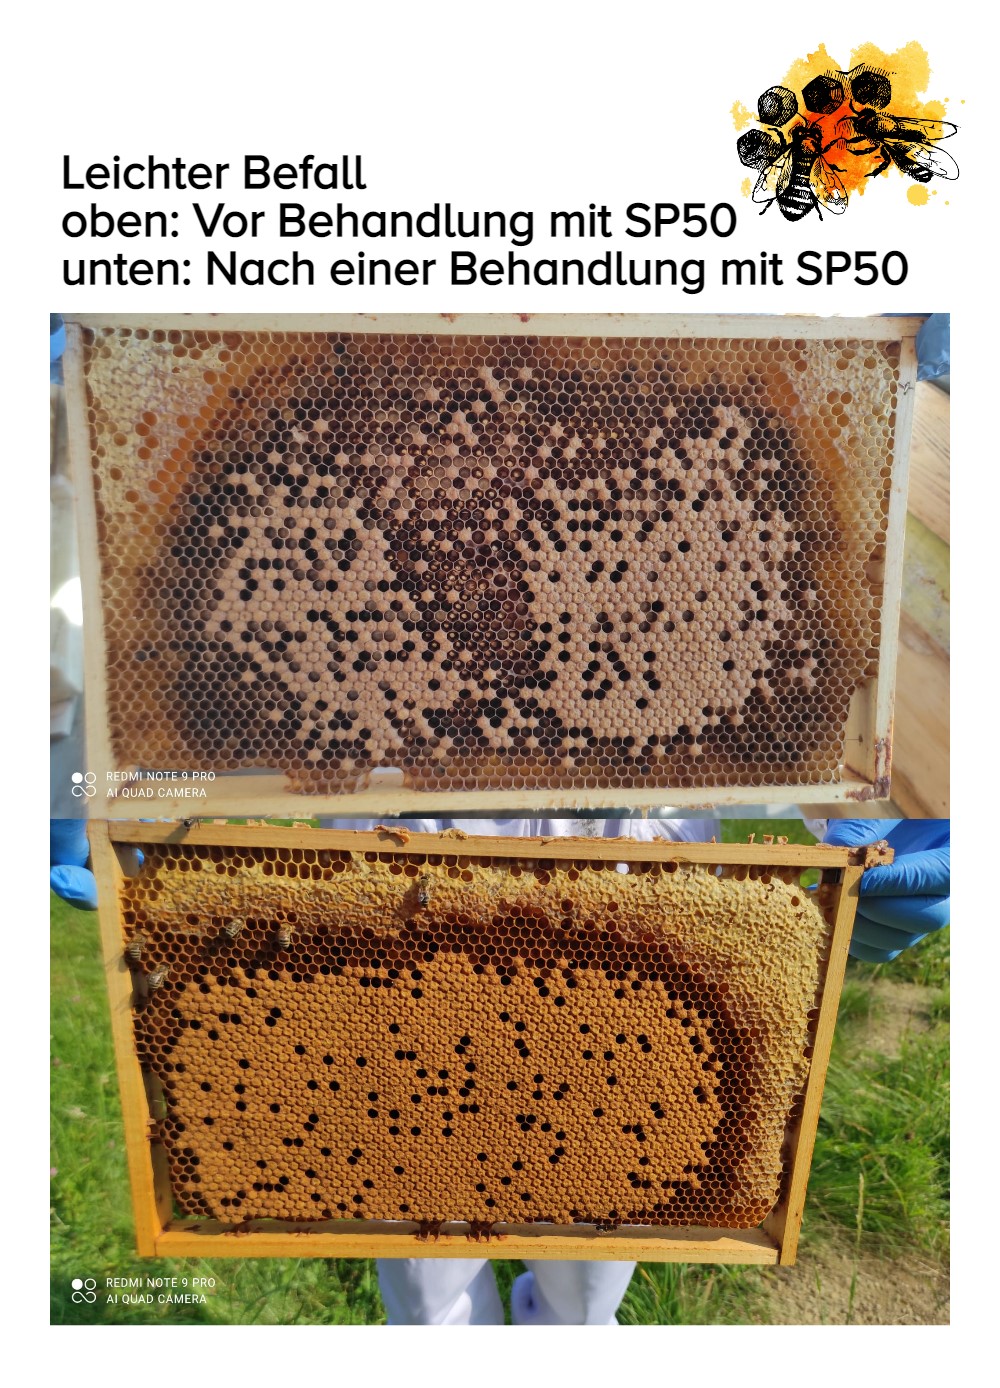 SP50 Bienenpflegemittel